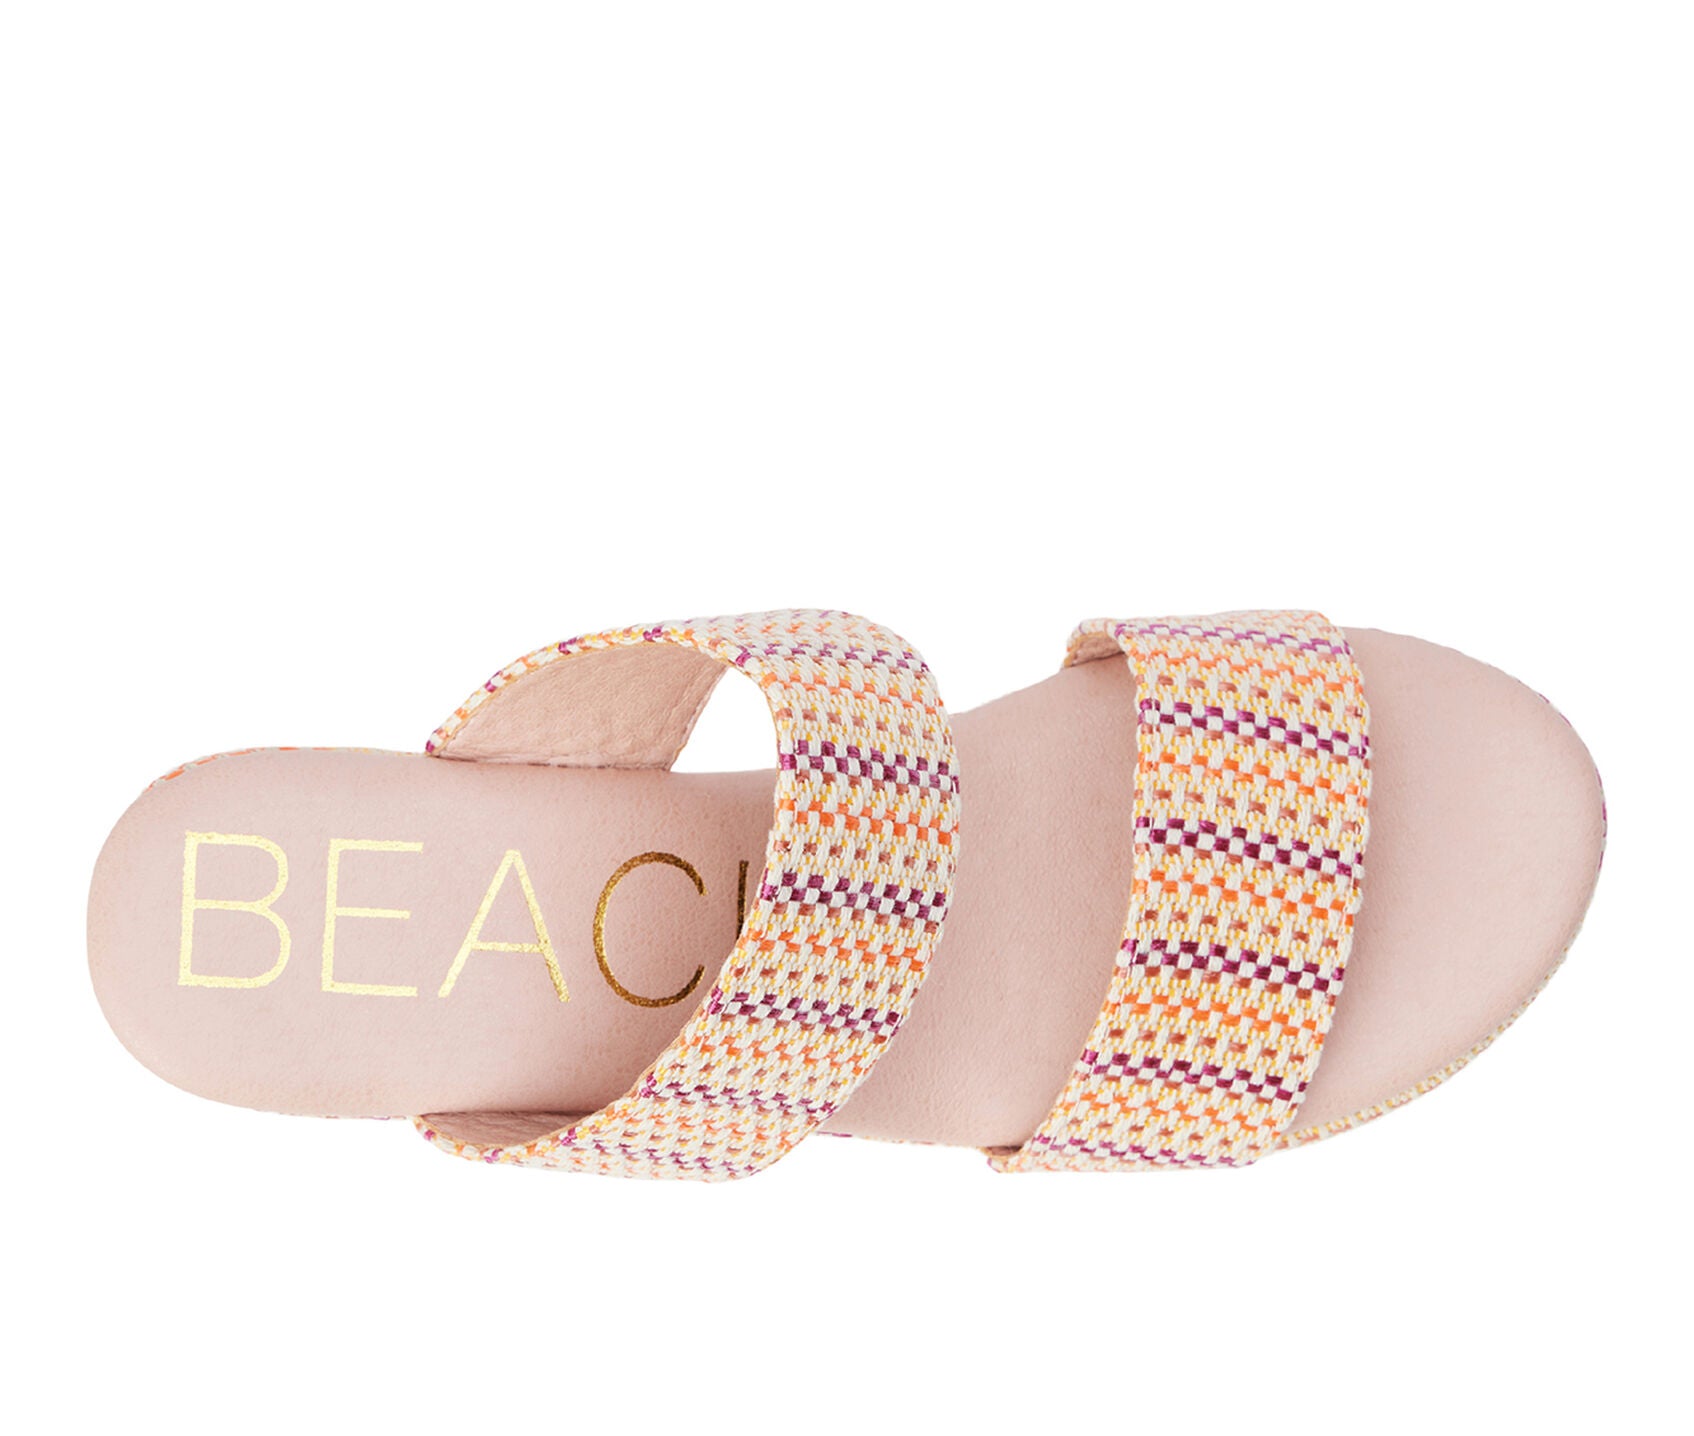 Ocean Ave Mosaic Platform Sandals